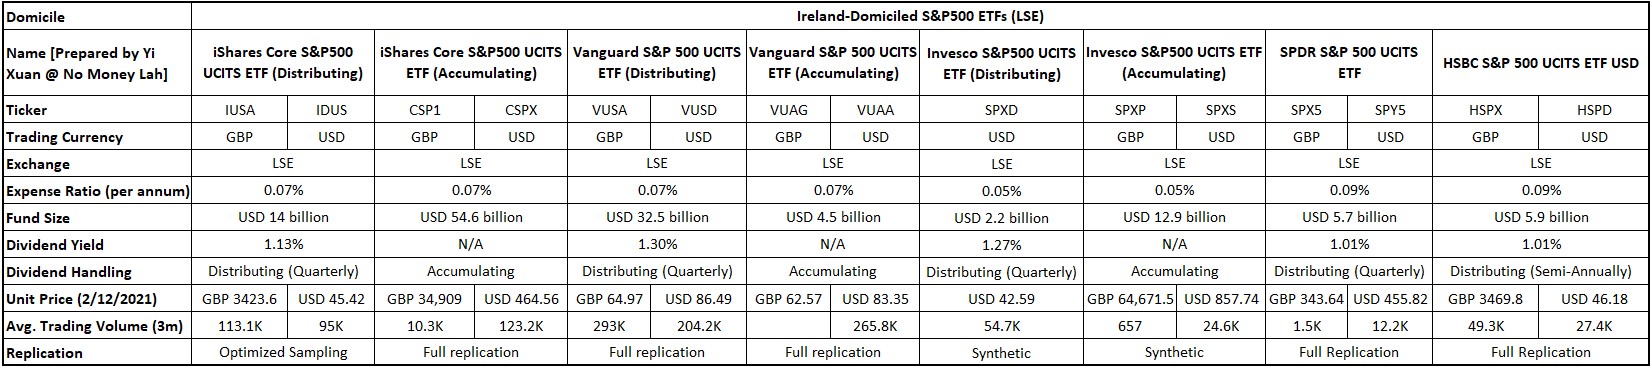 Ireland-Domiciled S&P500 ETFs 